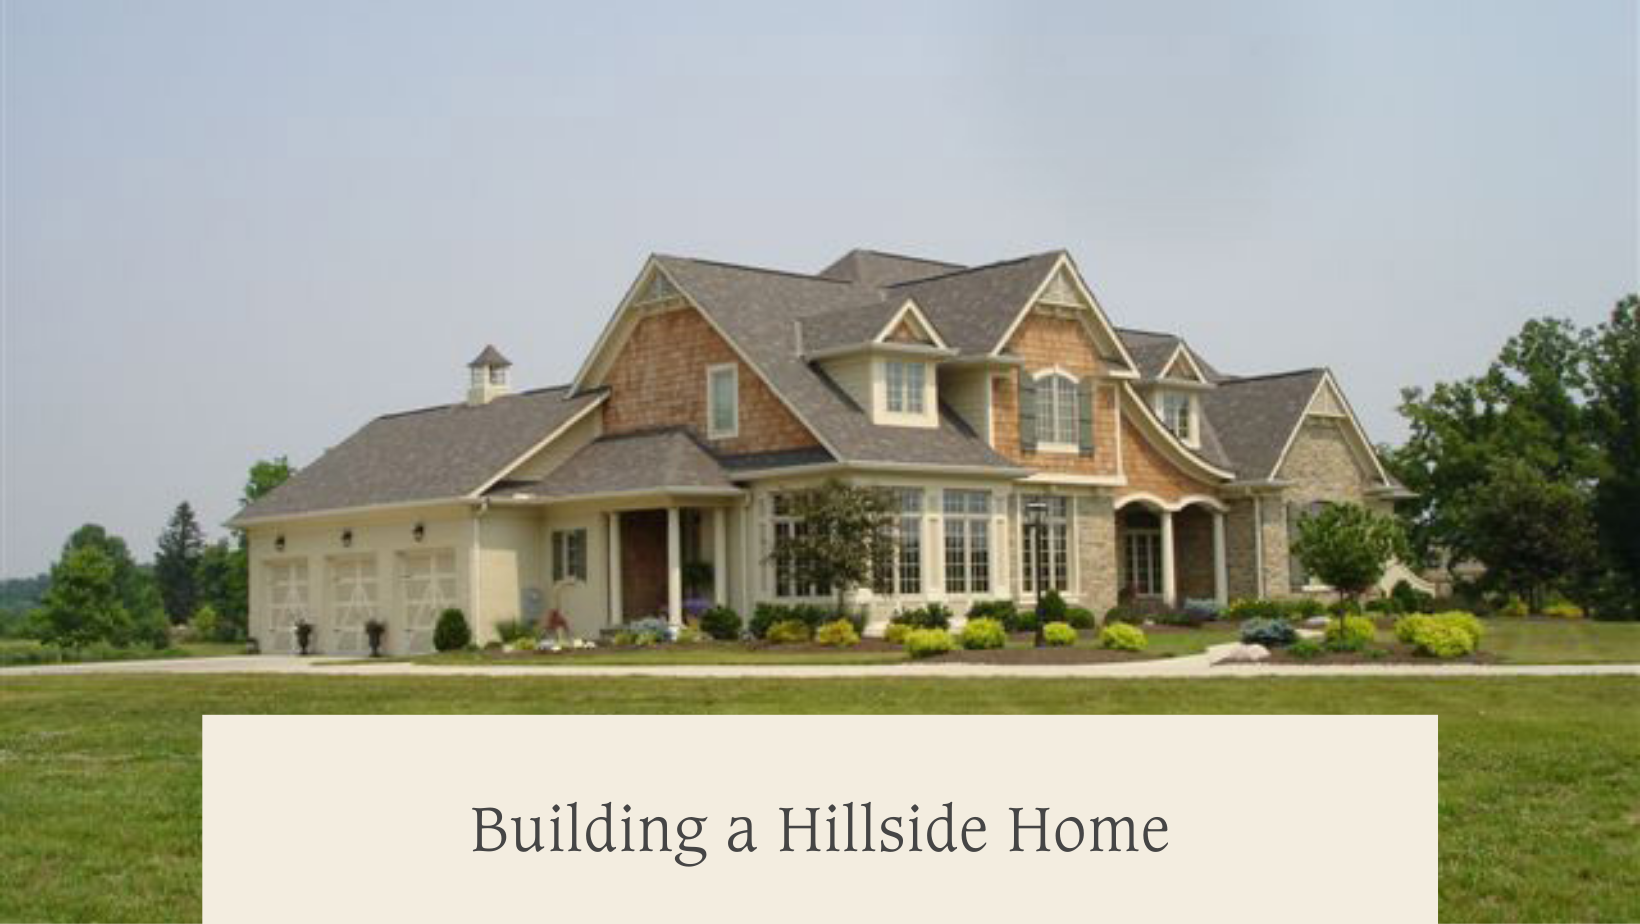 Building a Hillside Home